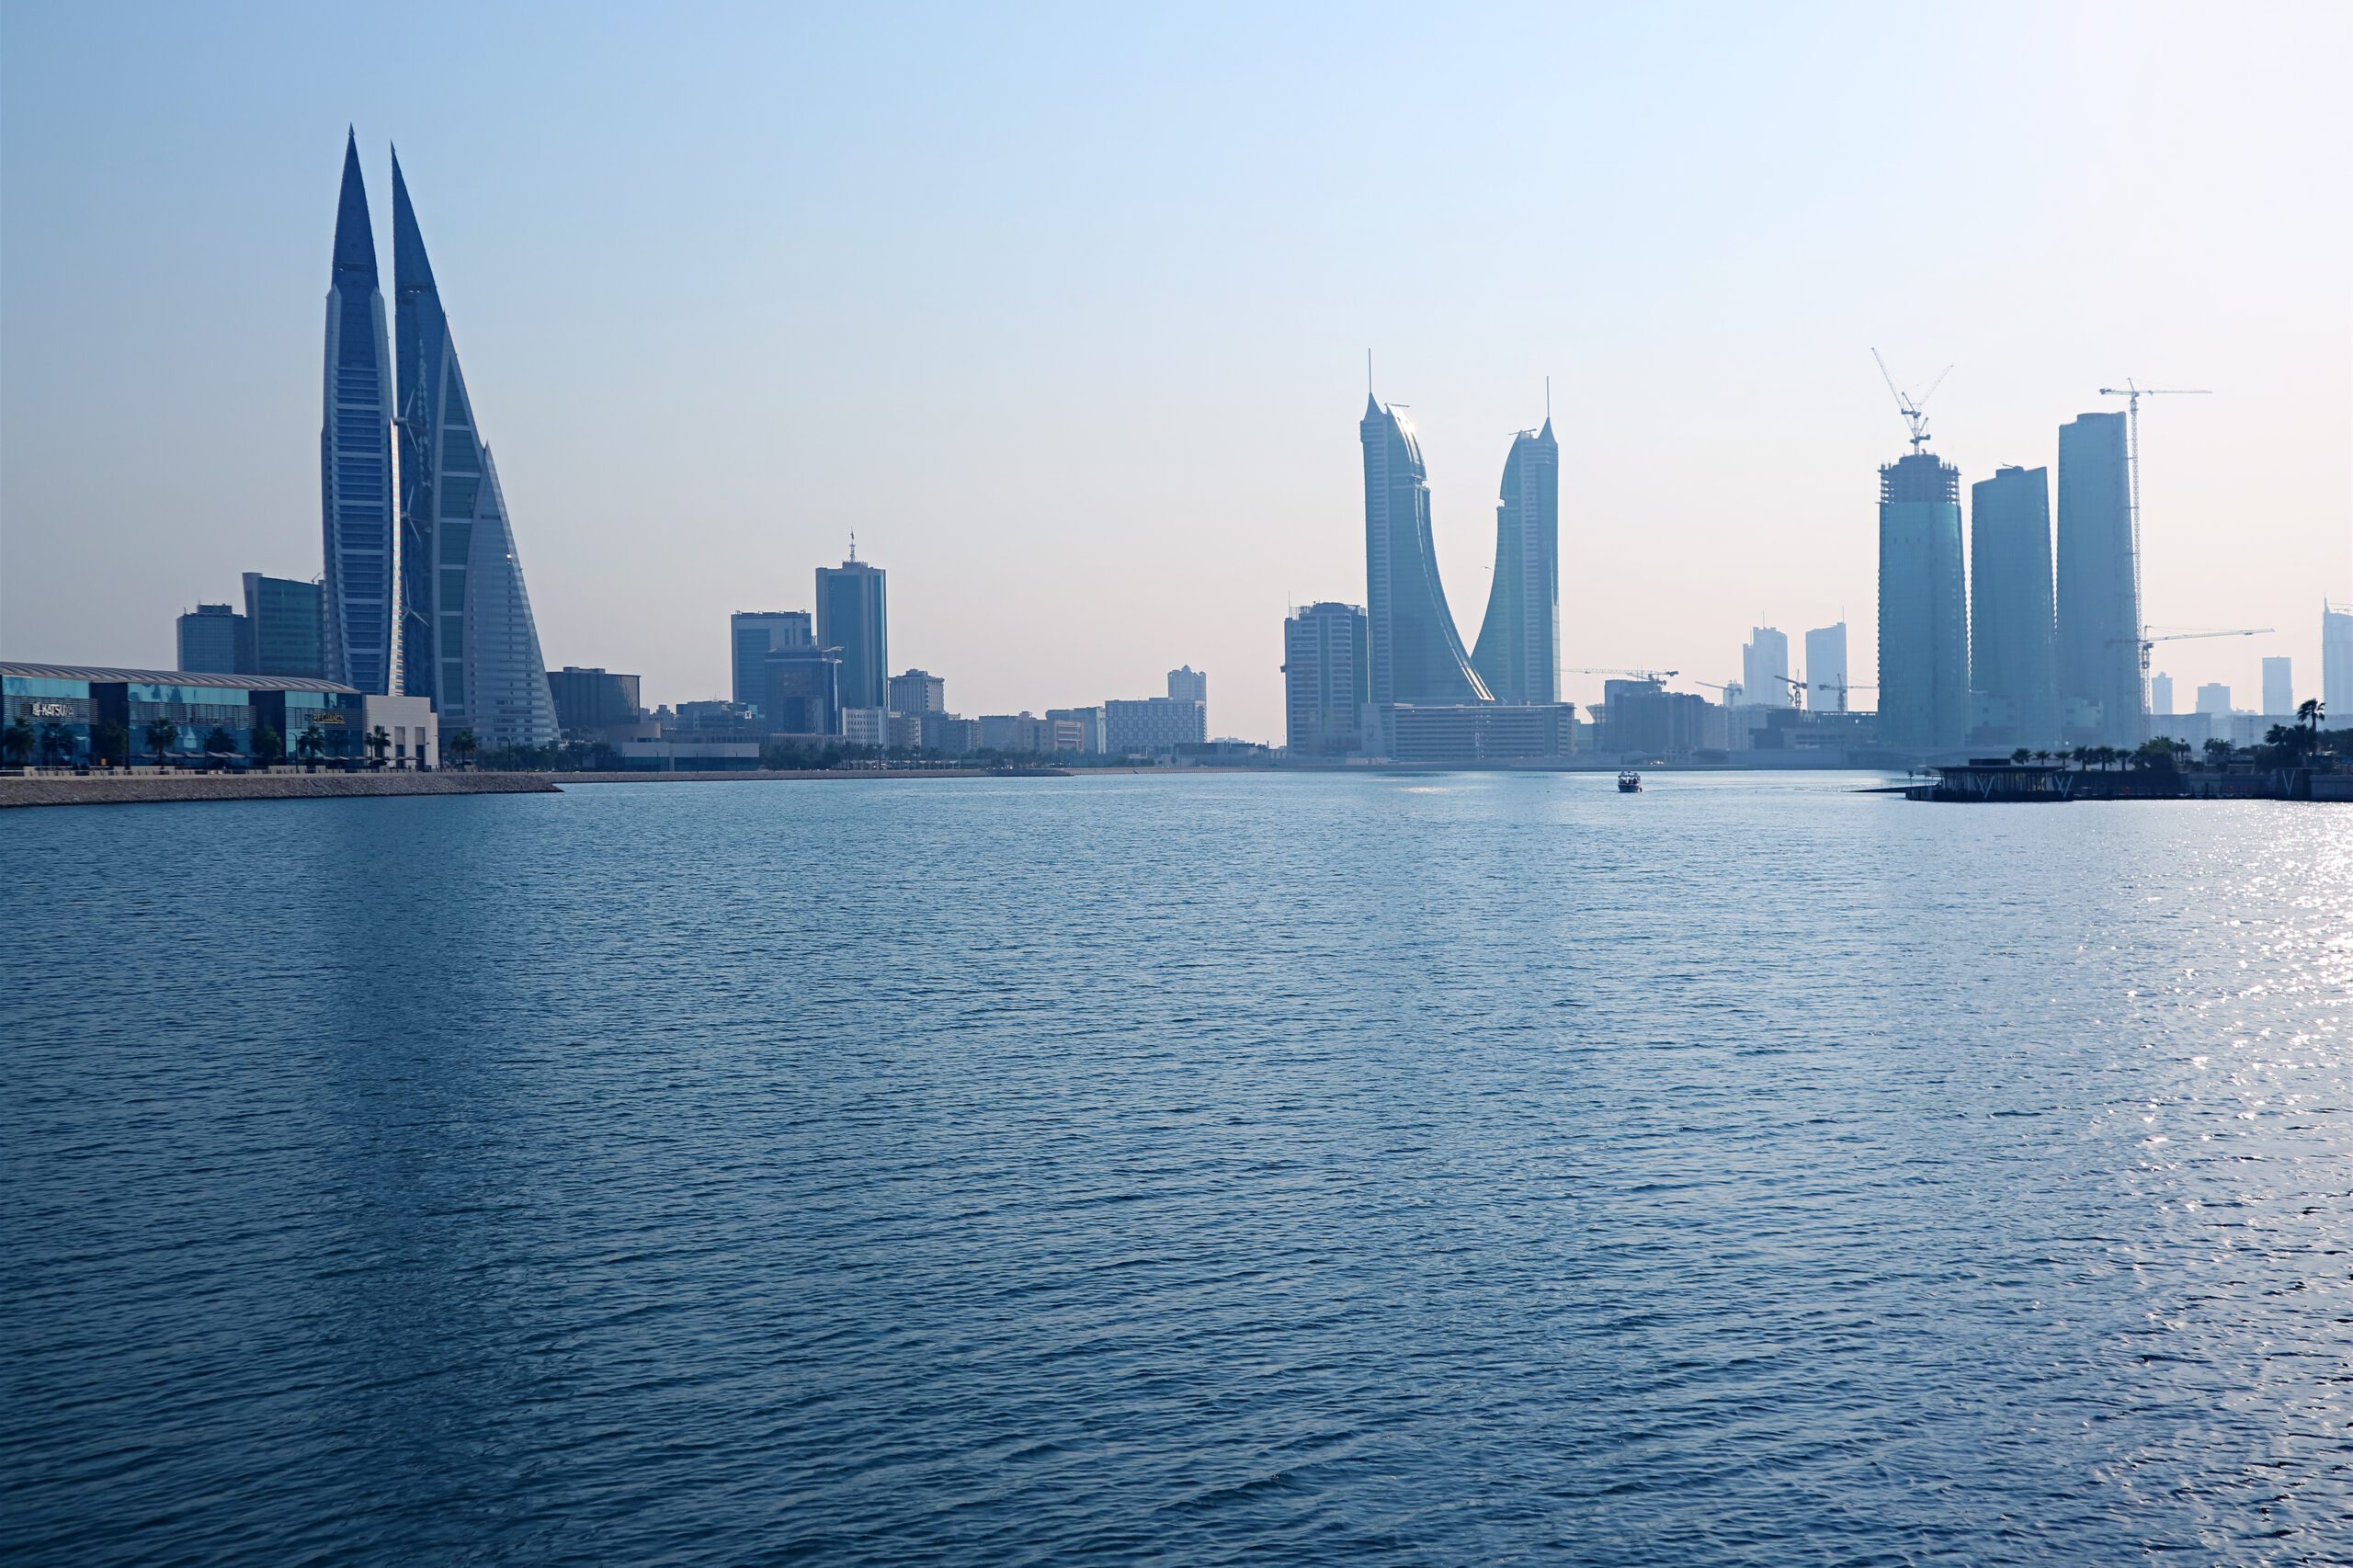 bahrain-financial-harbor-bfh-district-with-groups-iconic-landmark-manama-bahrain